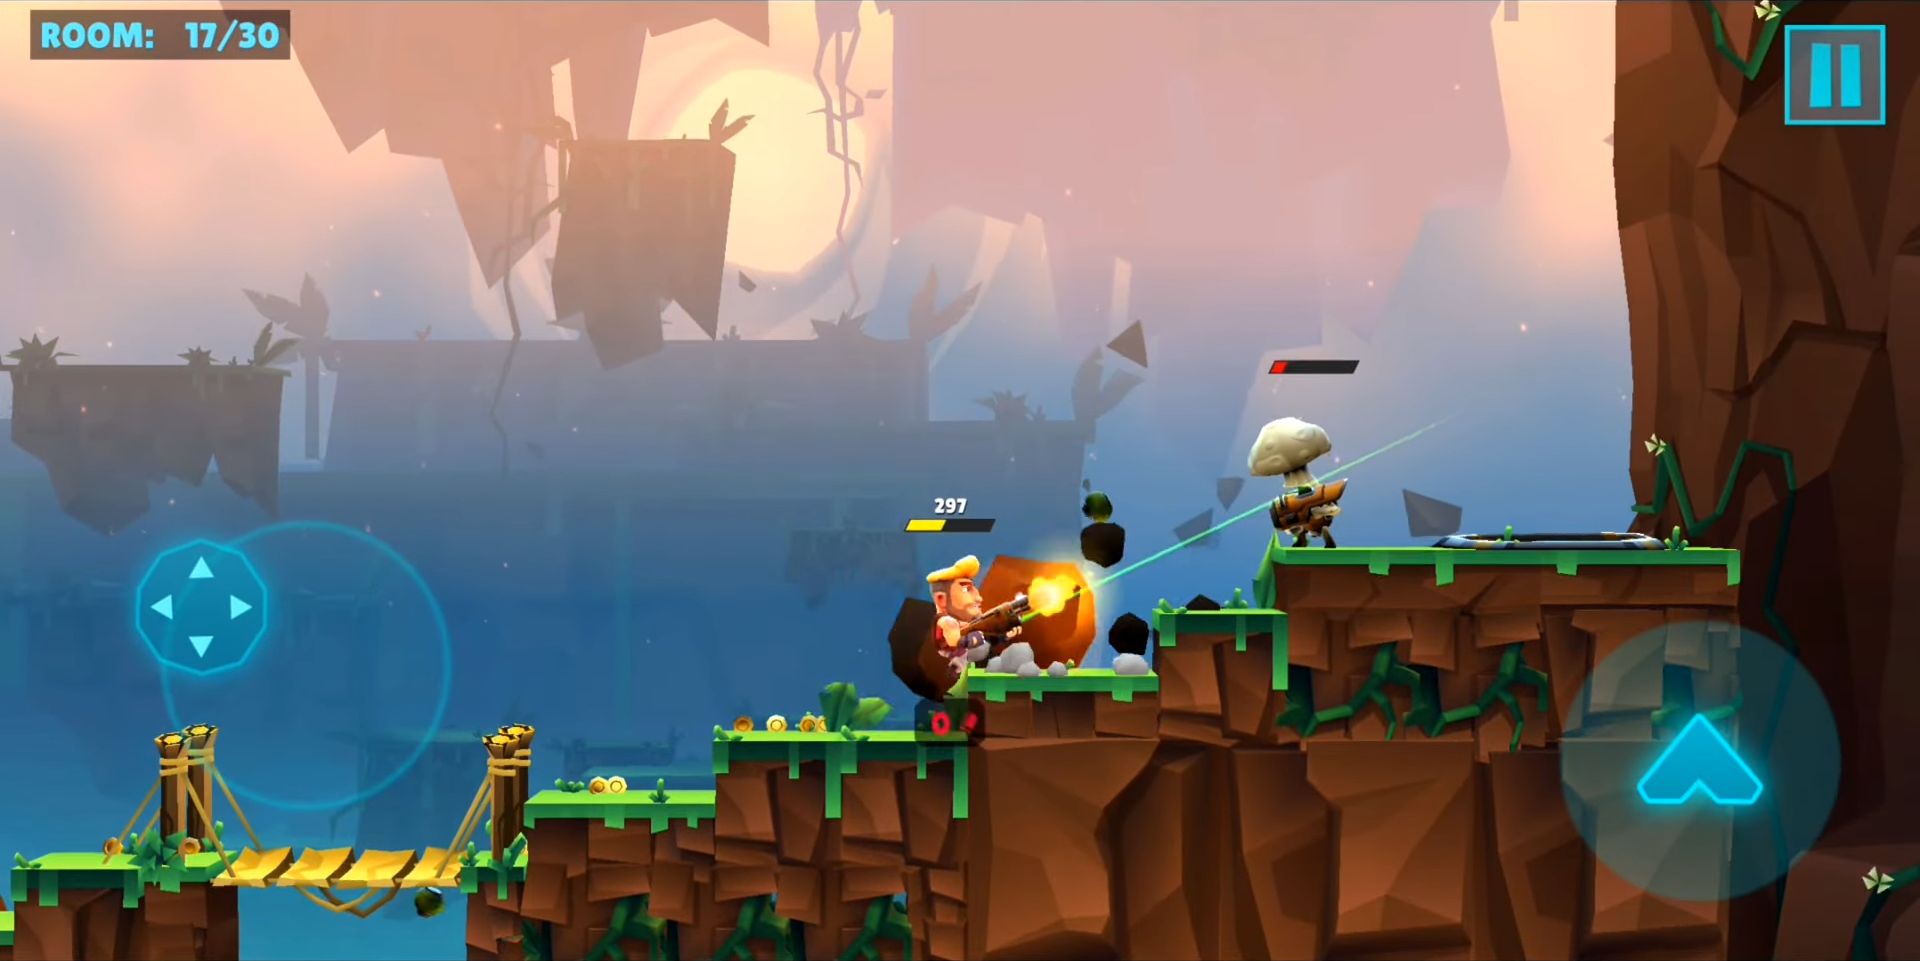 Gun Fungus - Android game screenshots.